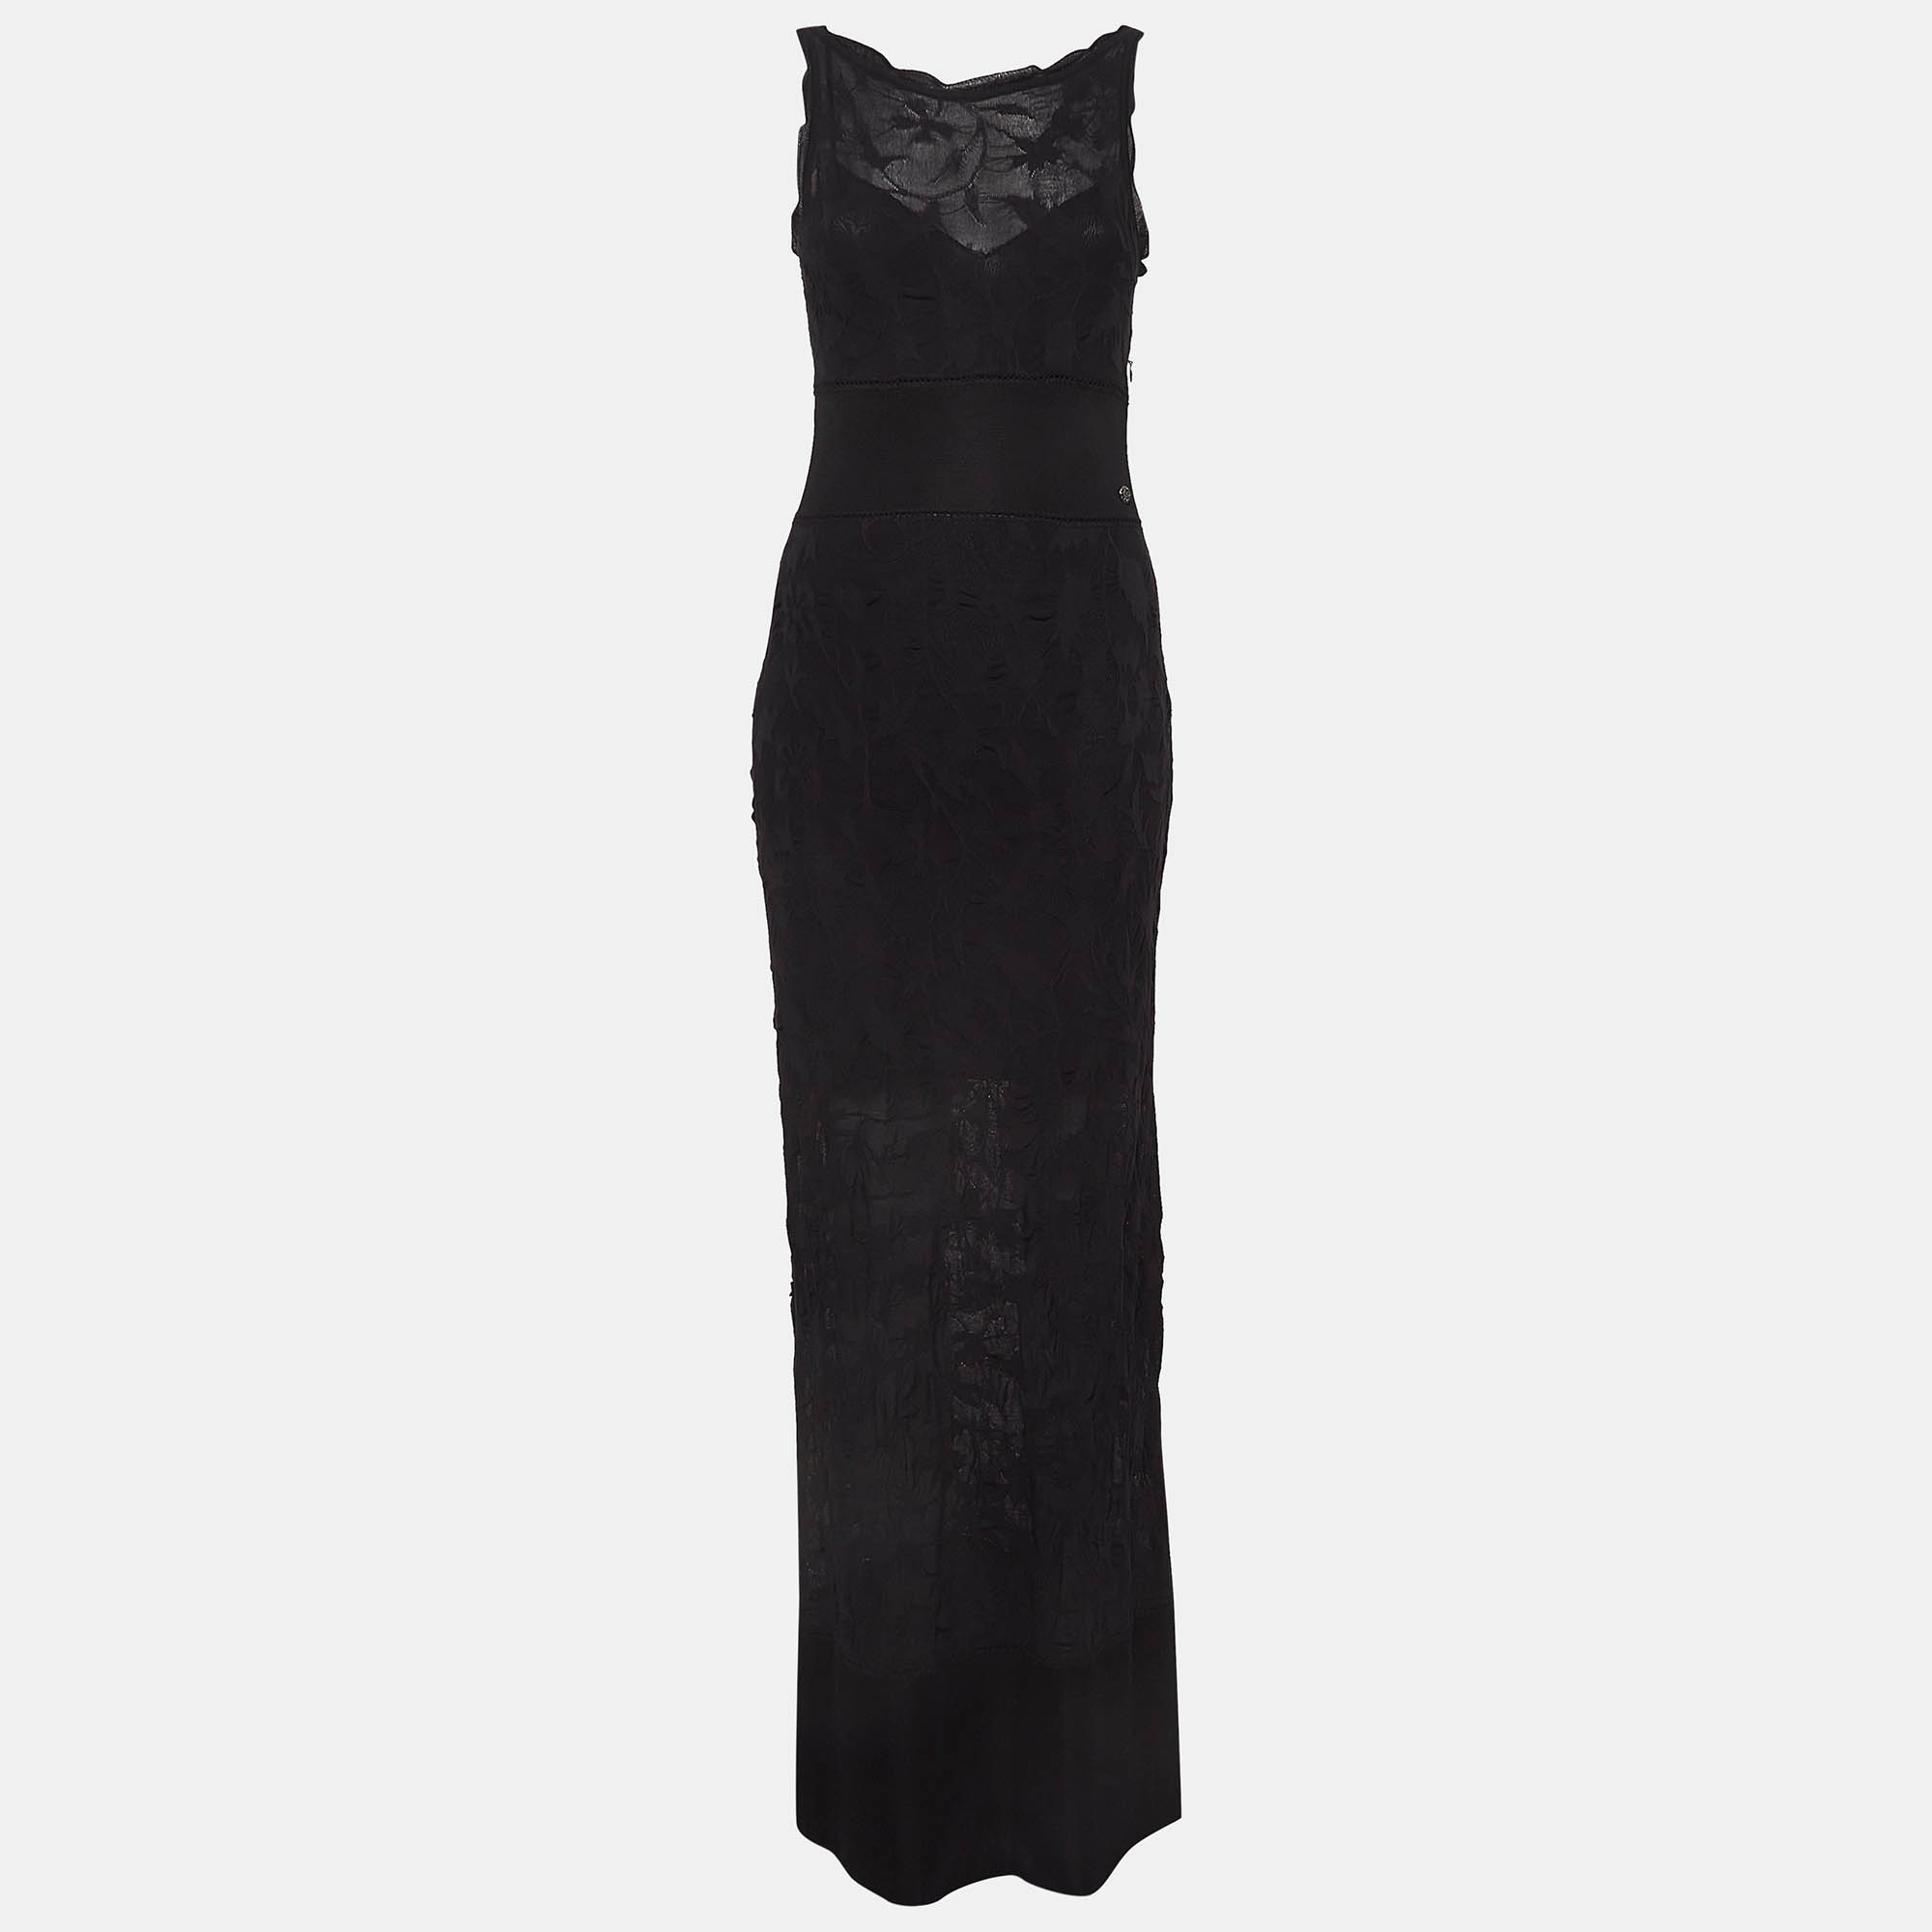 

Chanel Black Patterned Knit Maxi Dress S